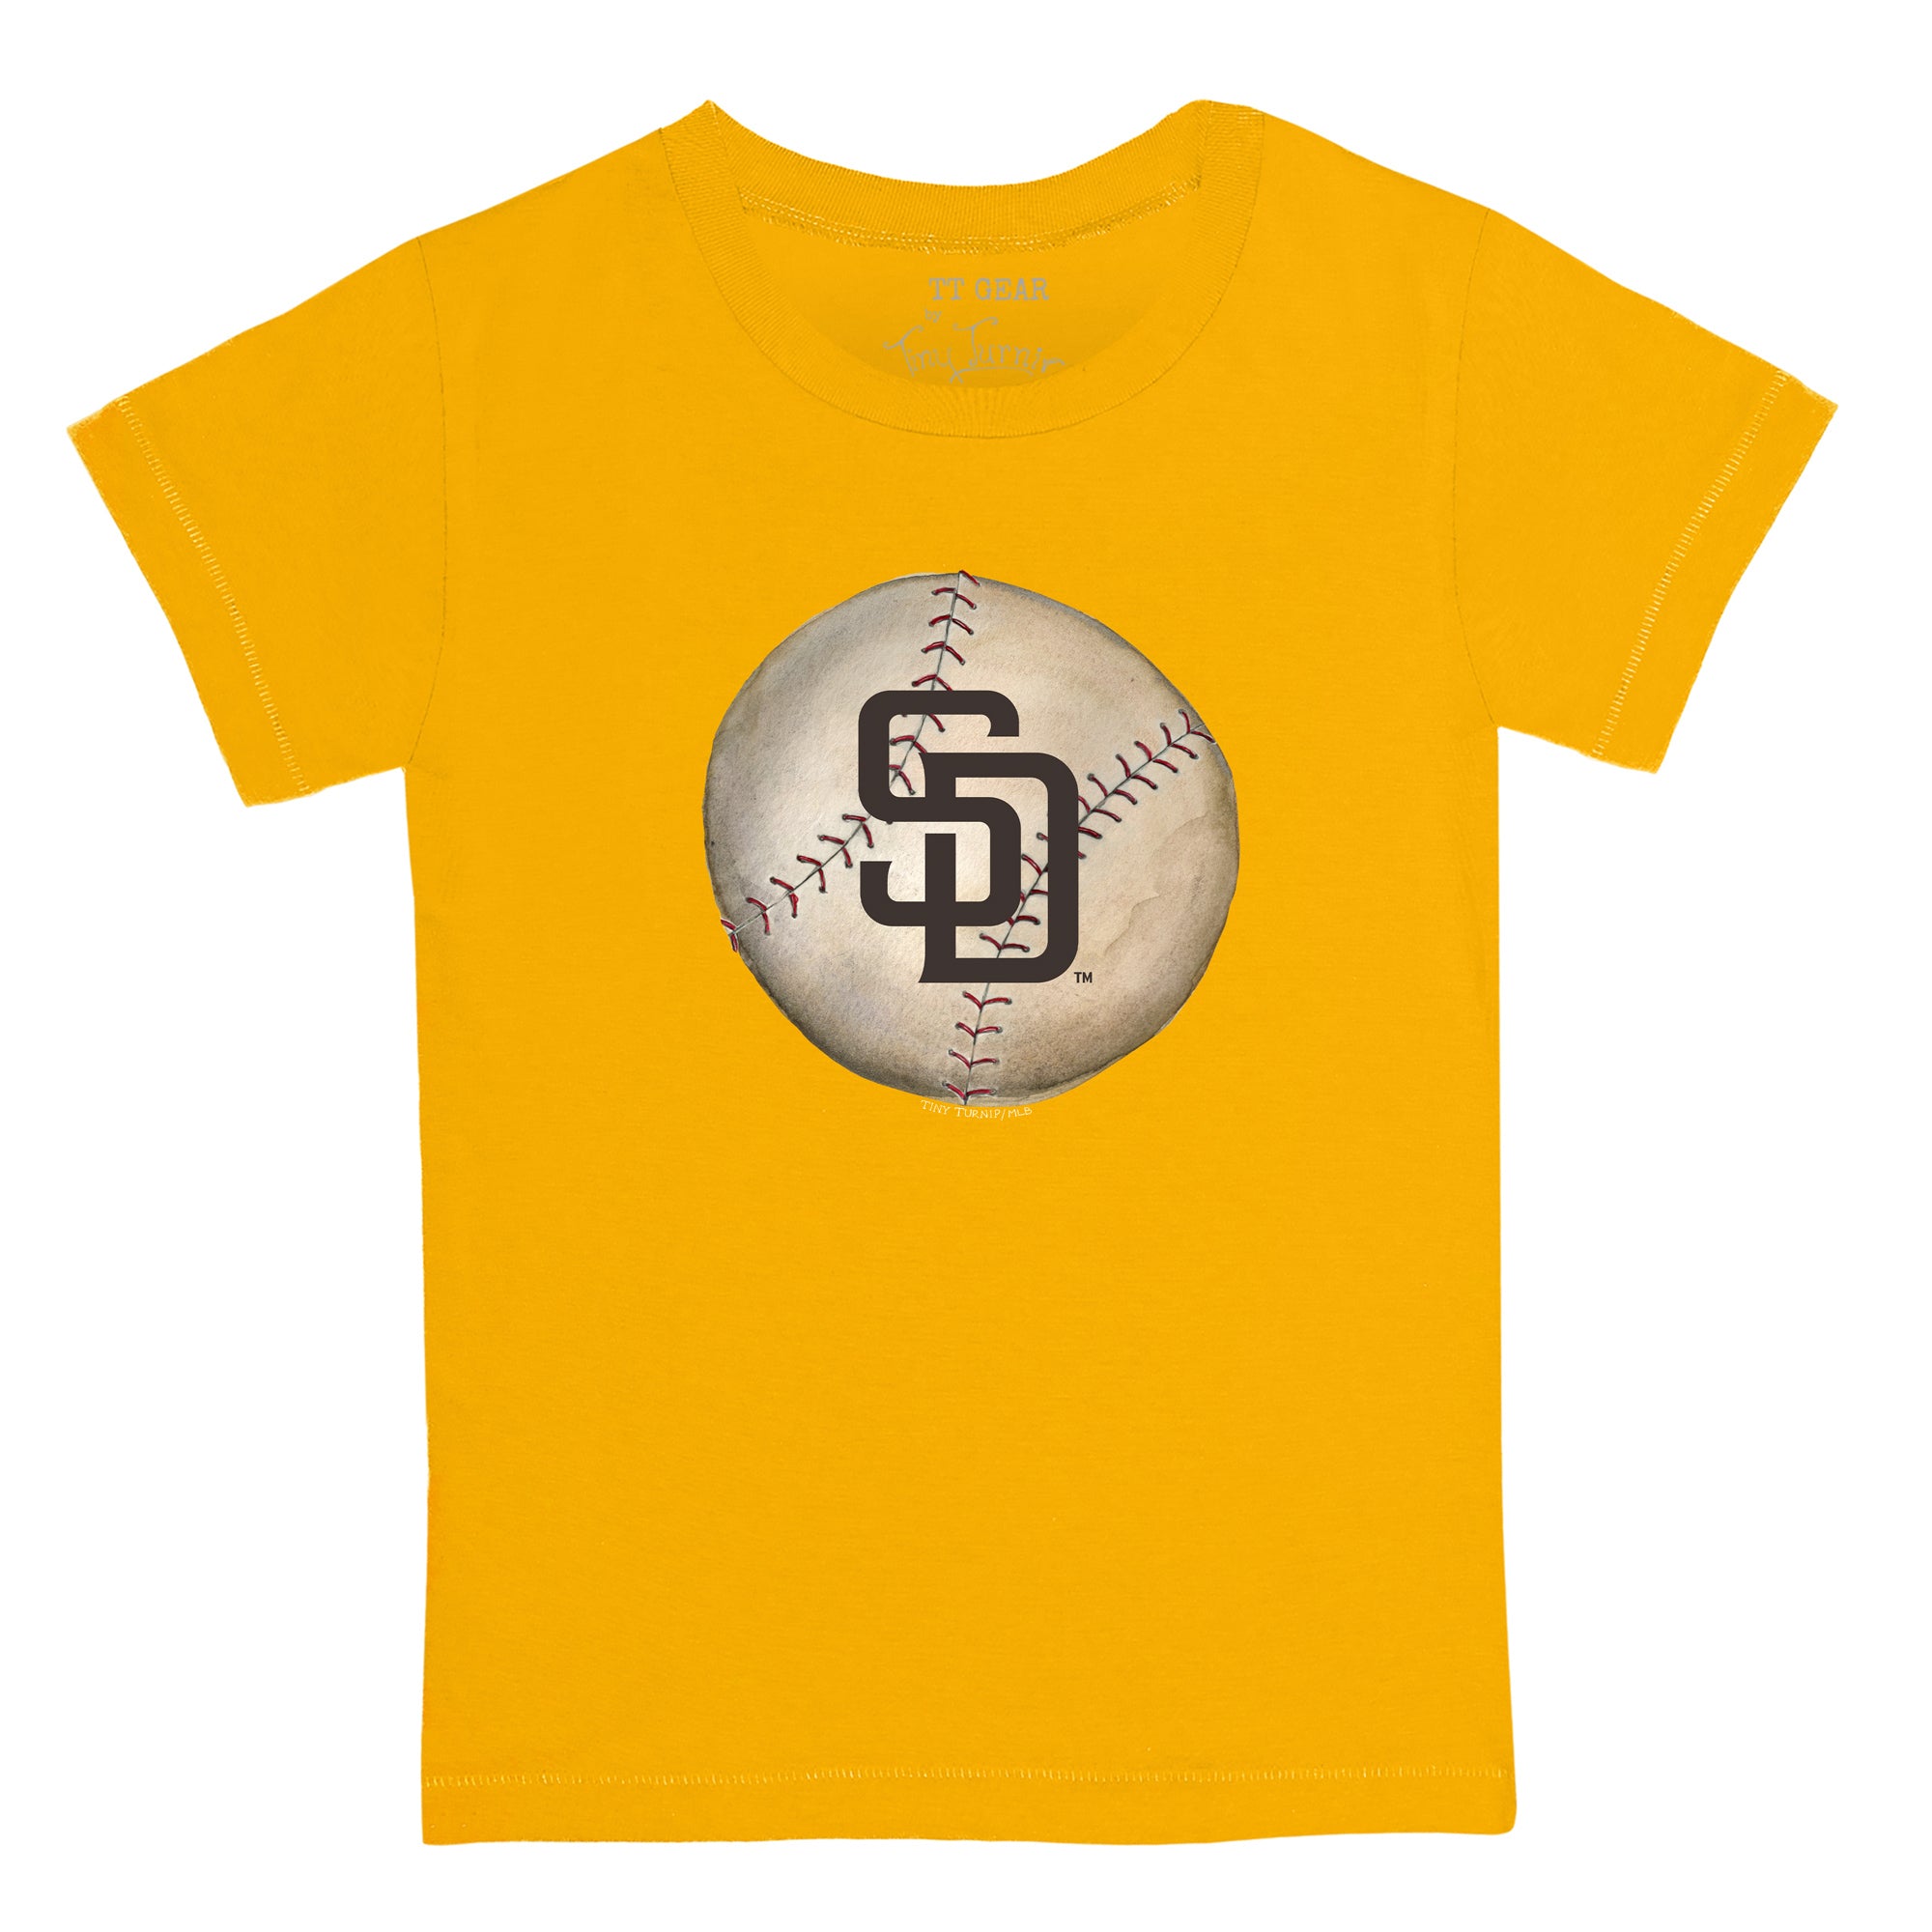 Lids Pittsburgh Pirates Tiny Turnip Women's Stitched Baseball 3/4-Sleeve  Raglan T-Shirt - White/Black